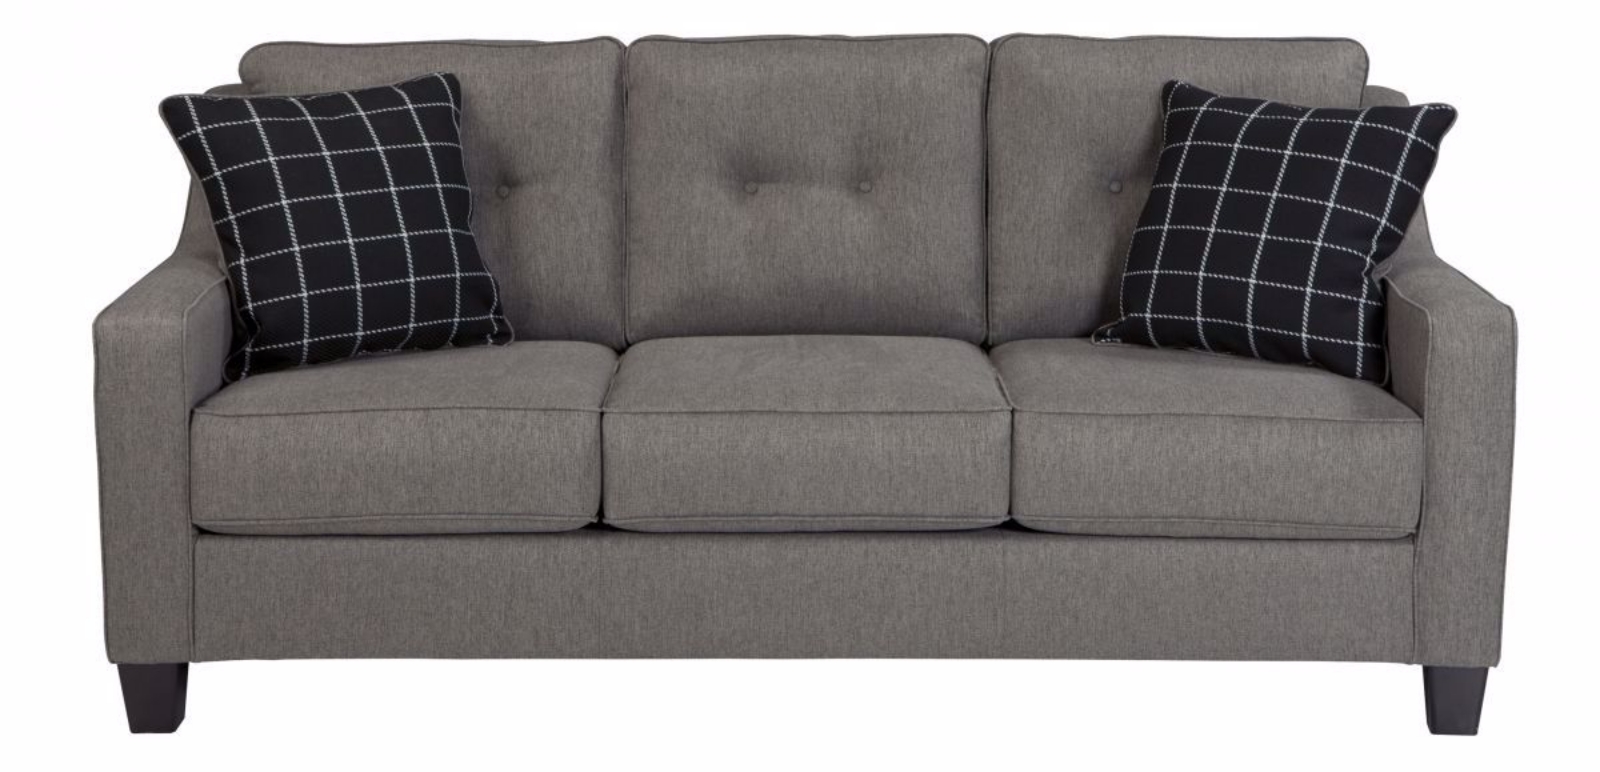 Picture of Brindon Sofa